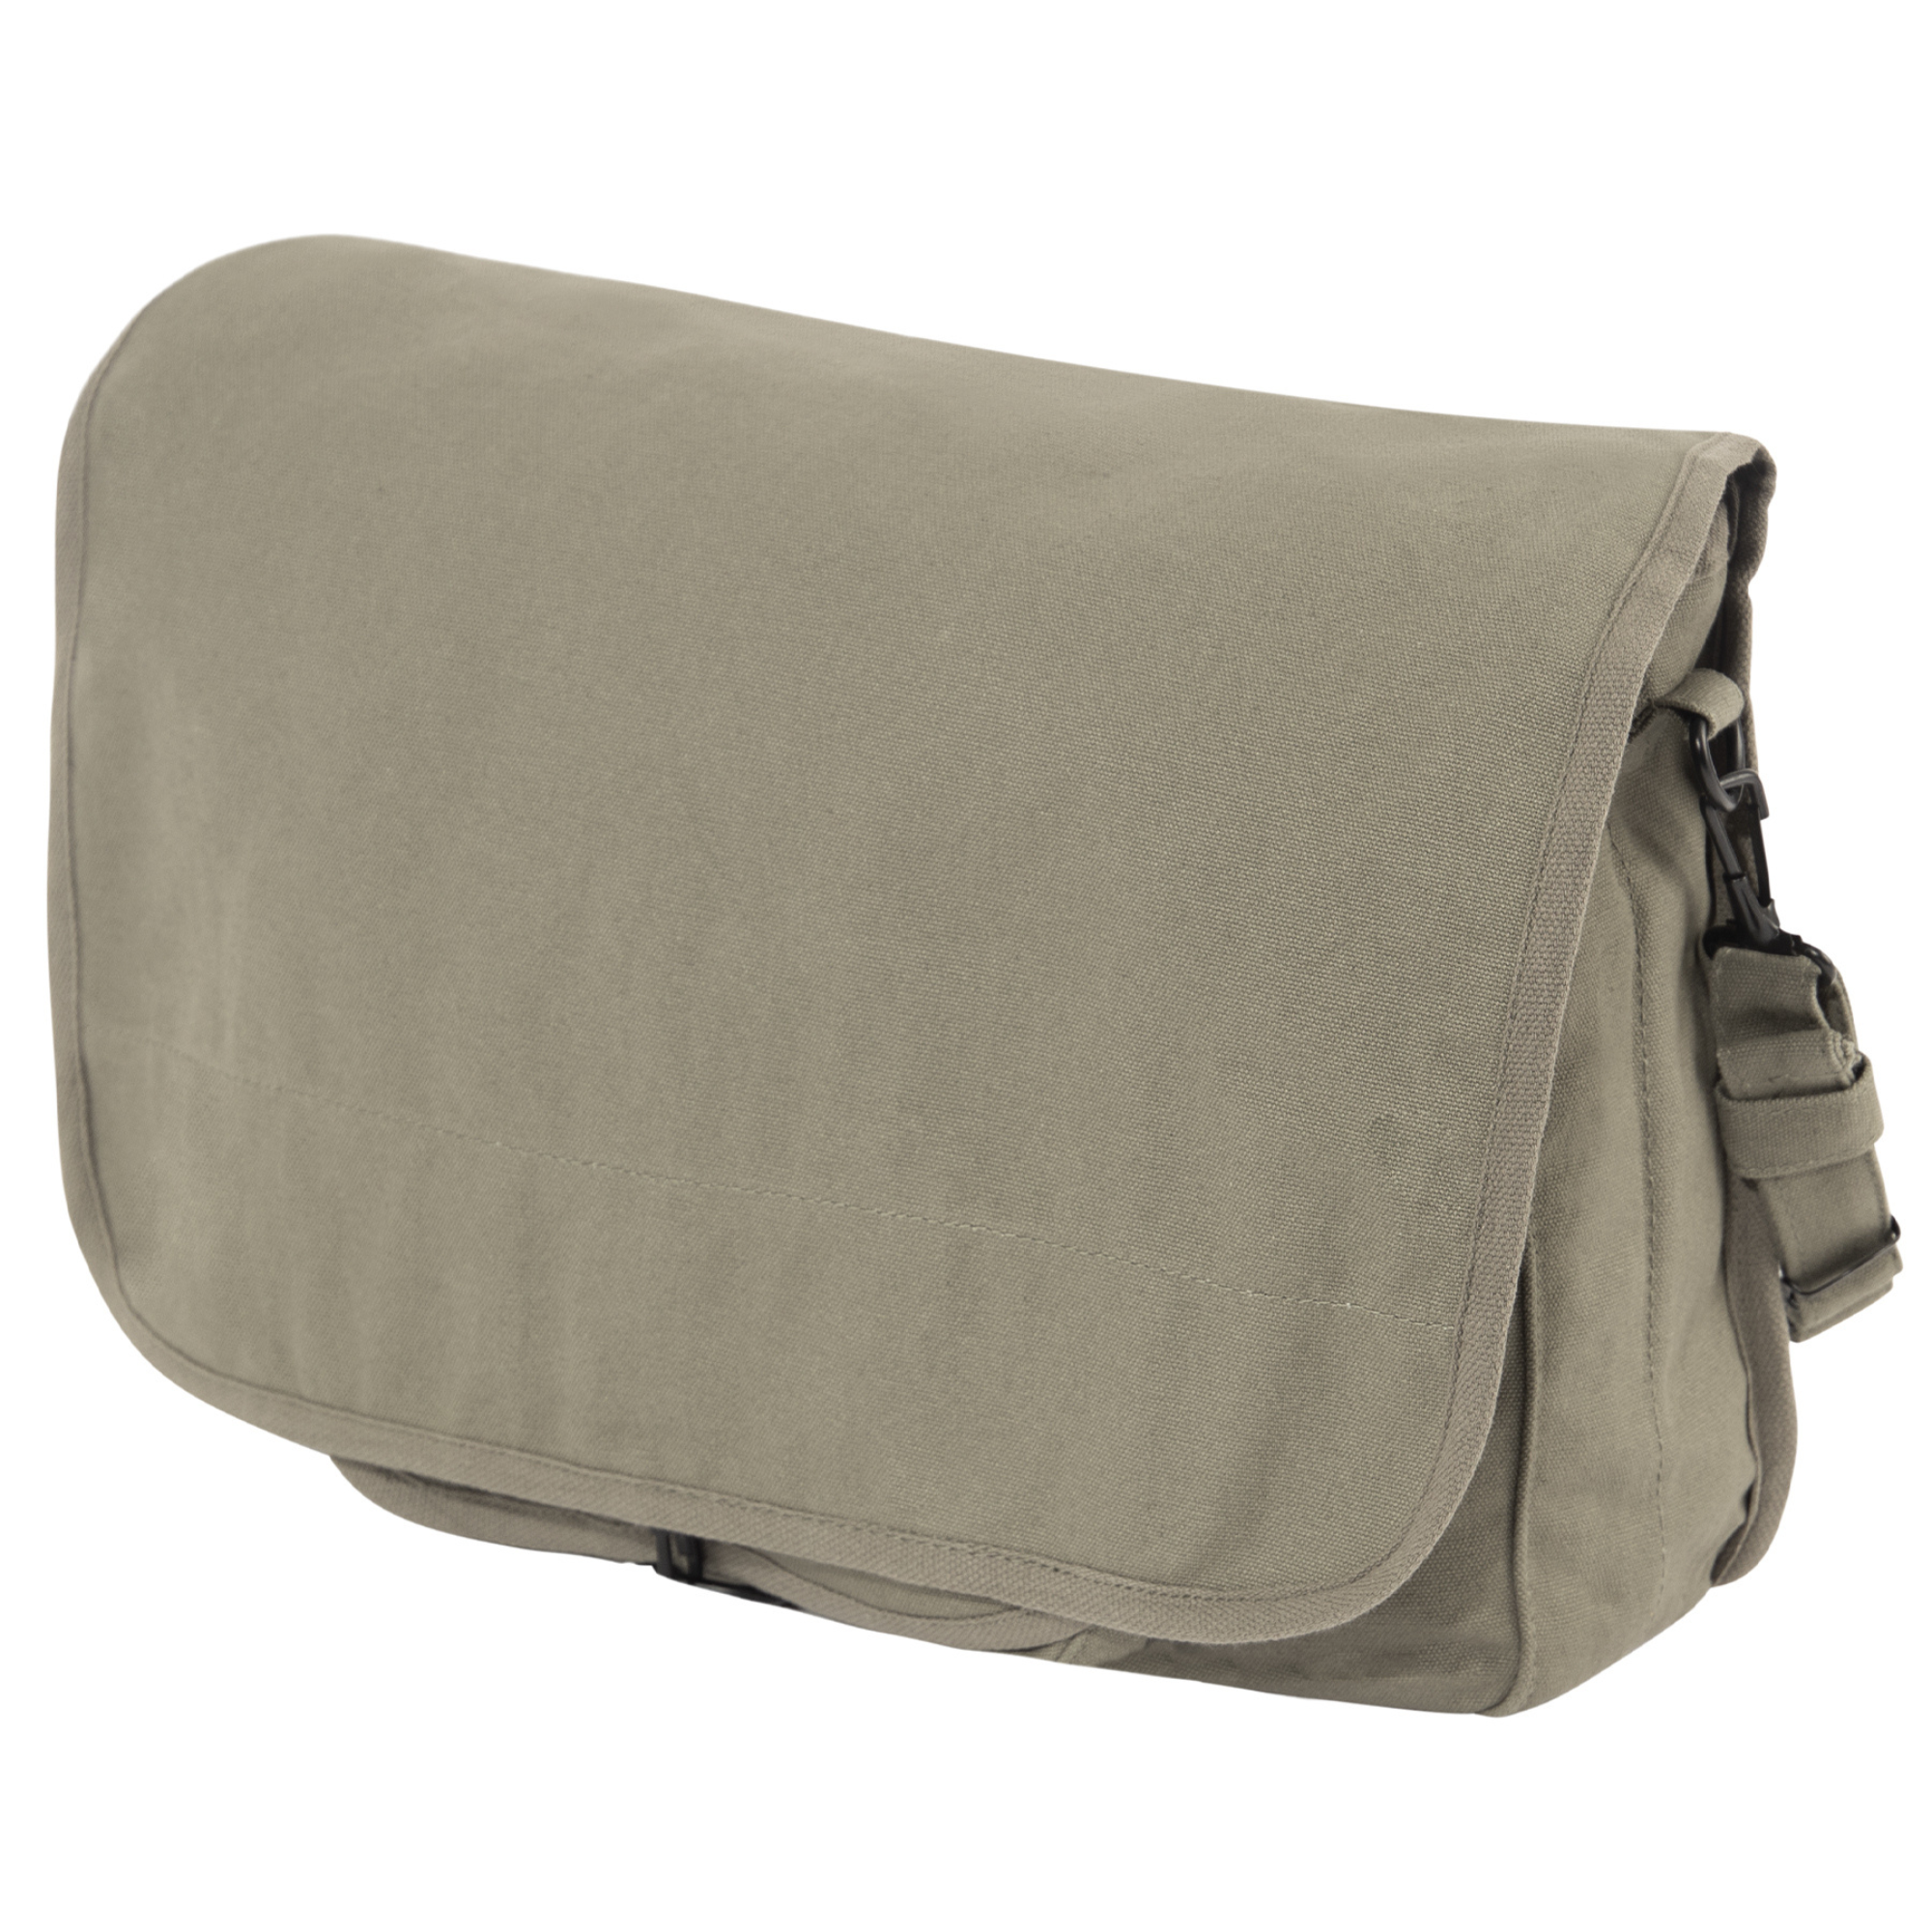 Olive Drab - Classic Army Paratrooper Shoulder Bag